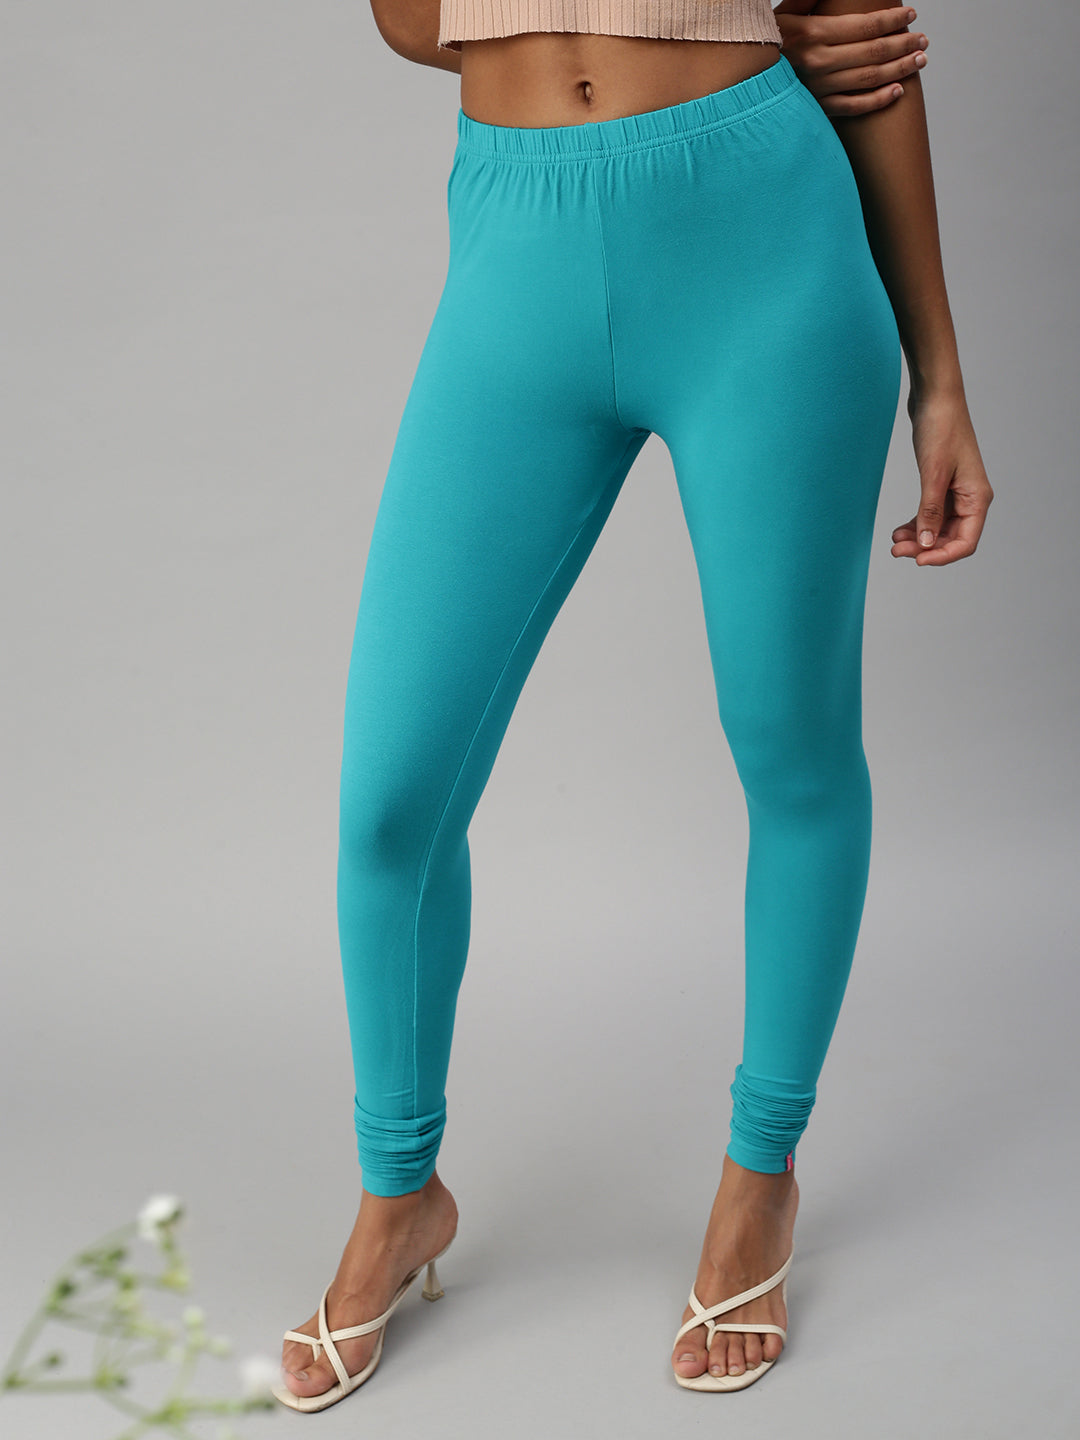 Get Stylish Turquoise Churidar Leggings by Prisma - Shop Now